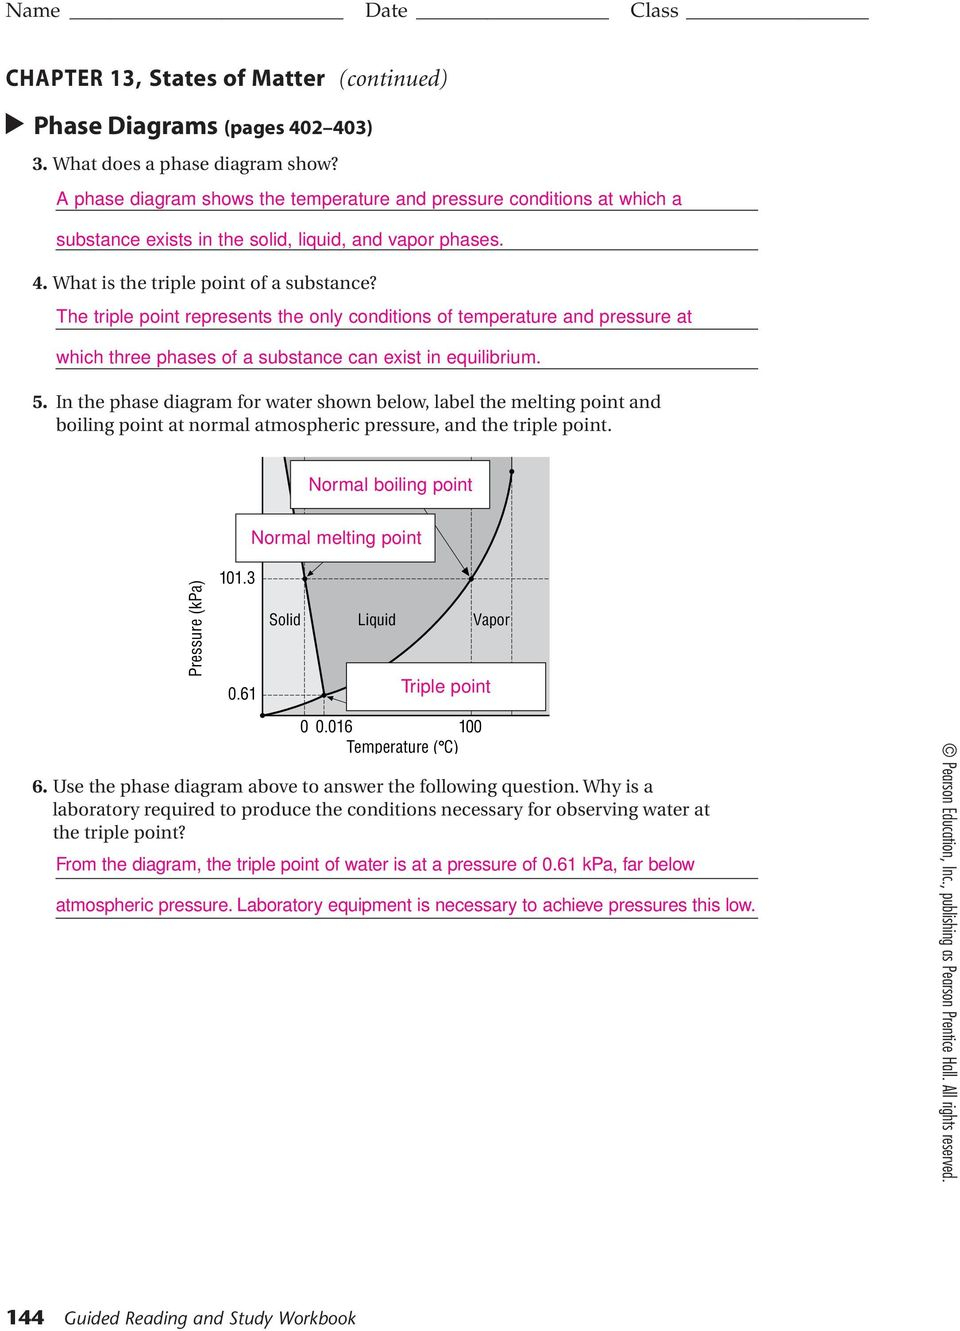 Phase Diagram Worksheet Worksheet Phase Diagram Worksheet Answers Hate Mysql Worksheet For